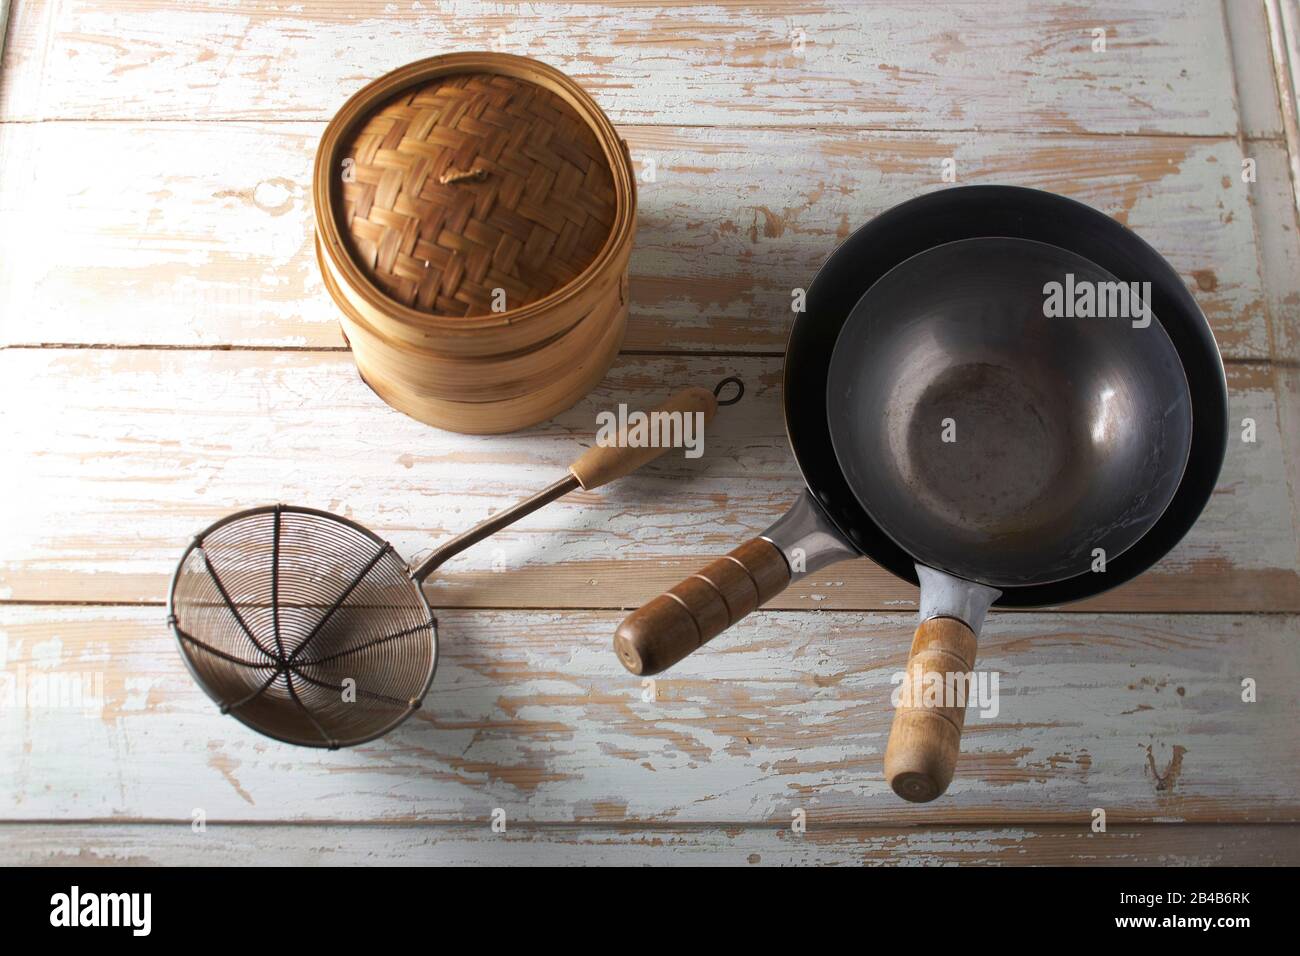 Wok, wok and steam atmosphere Stock Photo